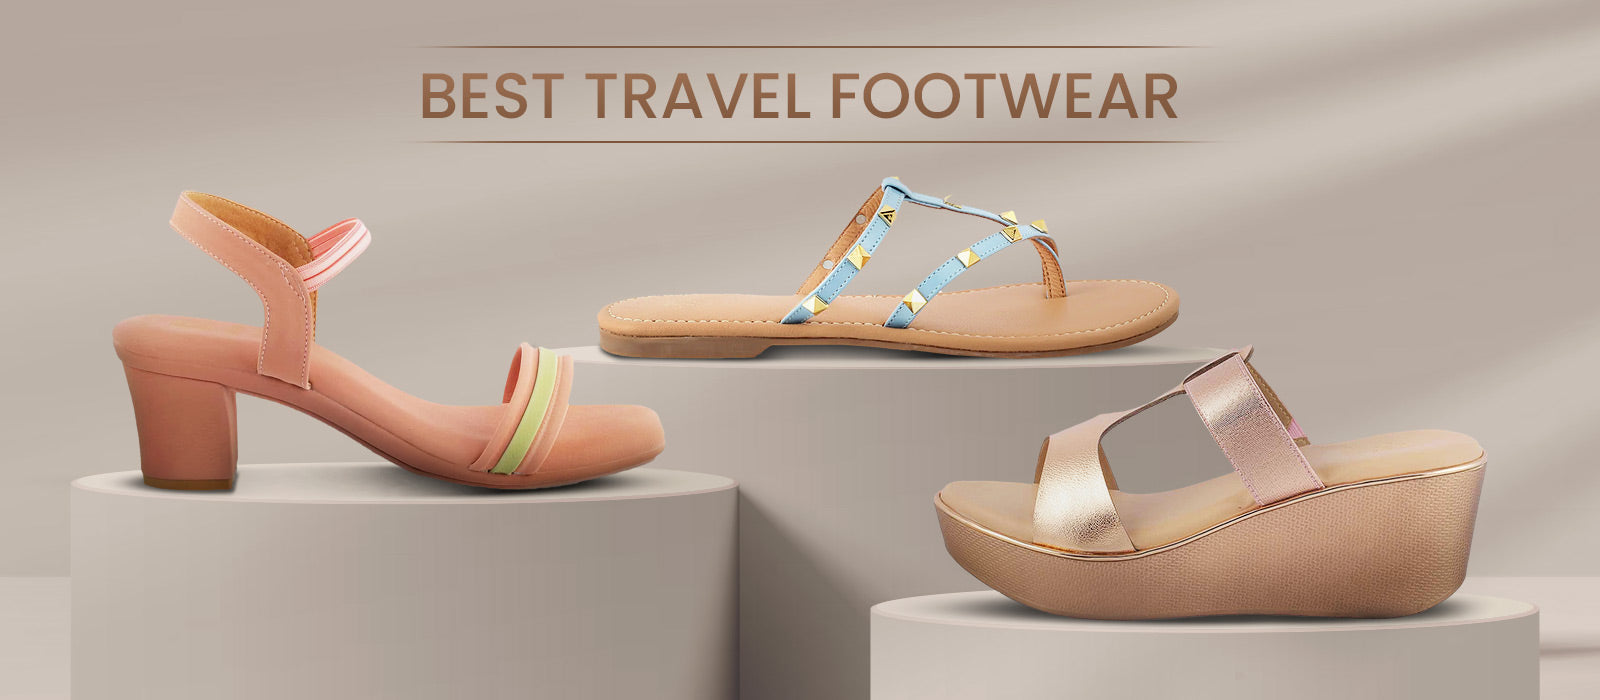 Best Travel Footwear: Explore Your Wanderlust with Tresmode